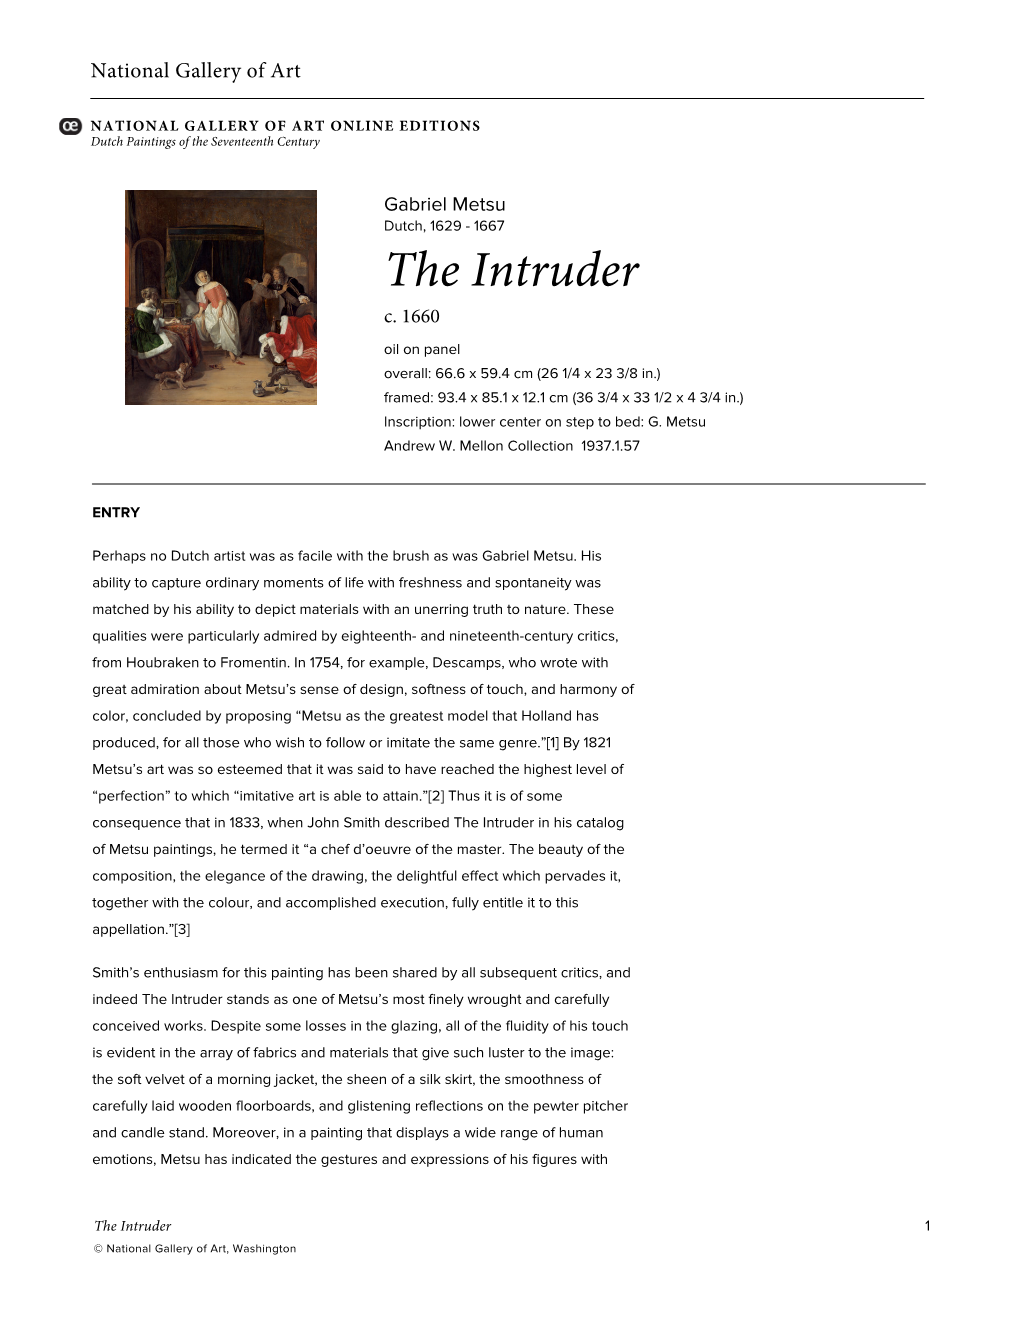 The Intruder C